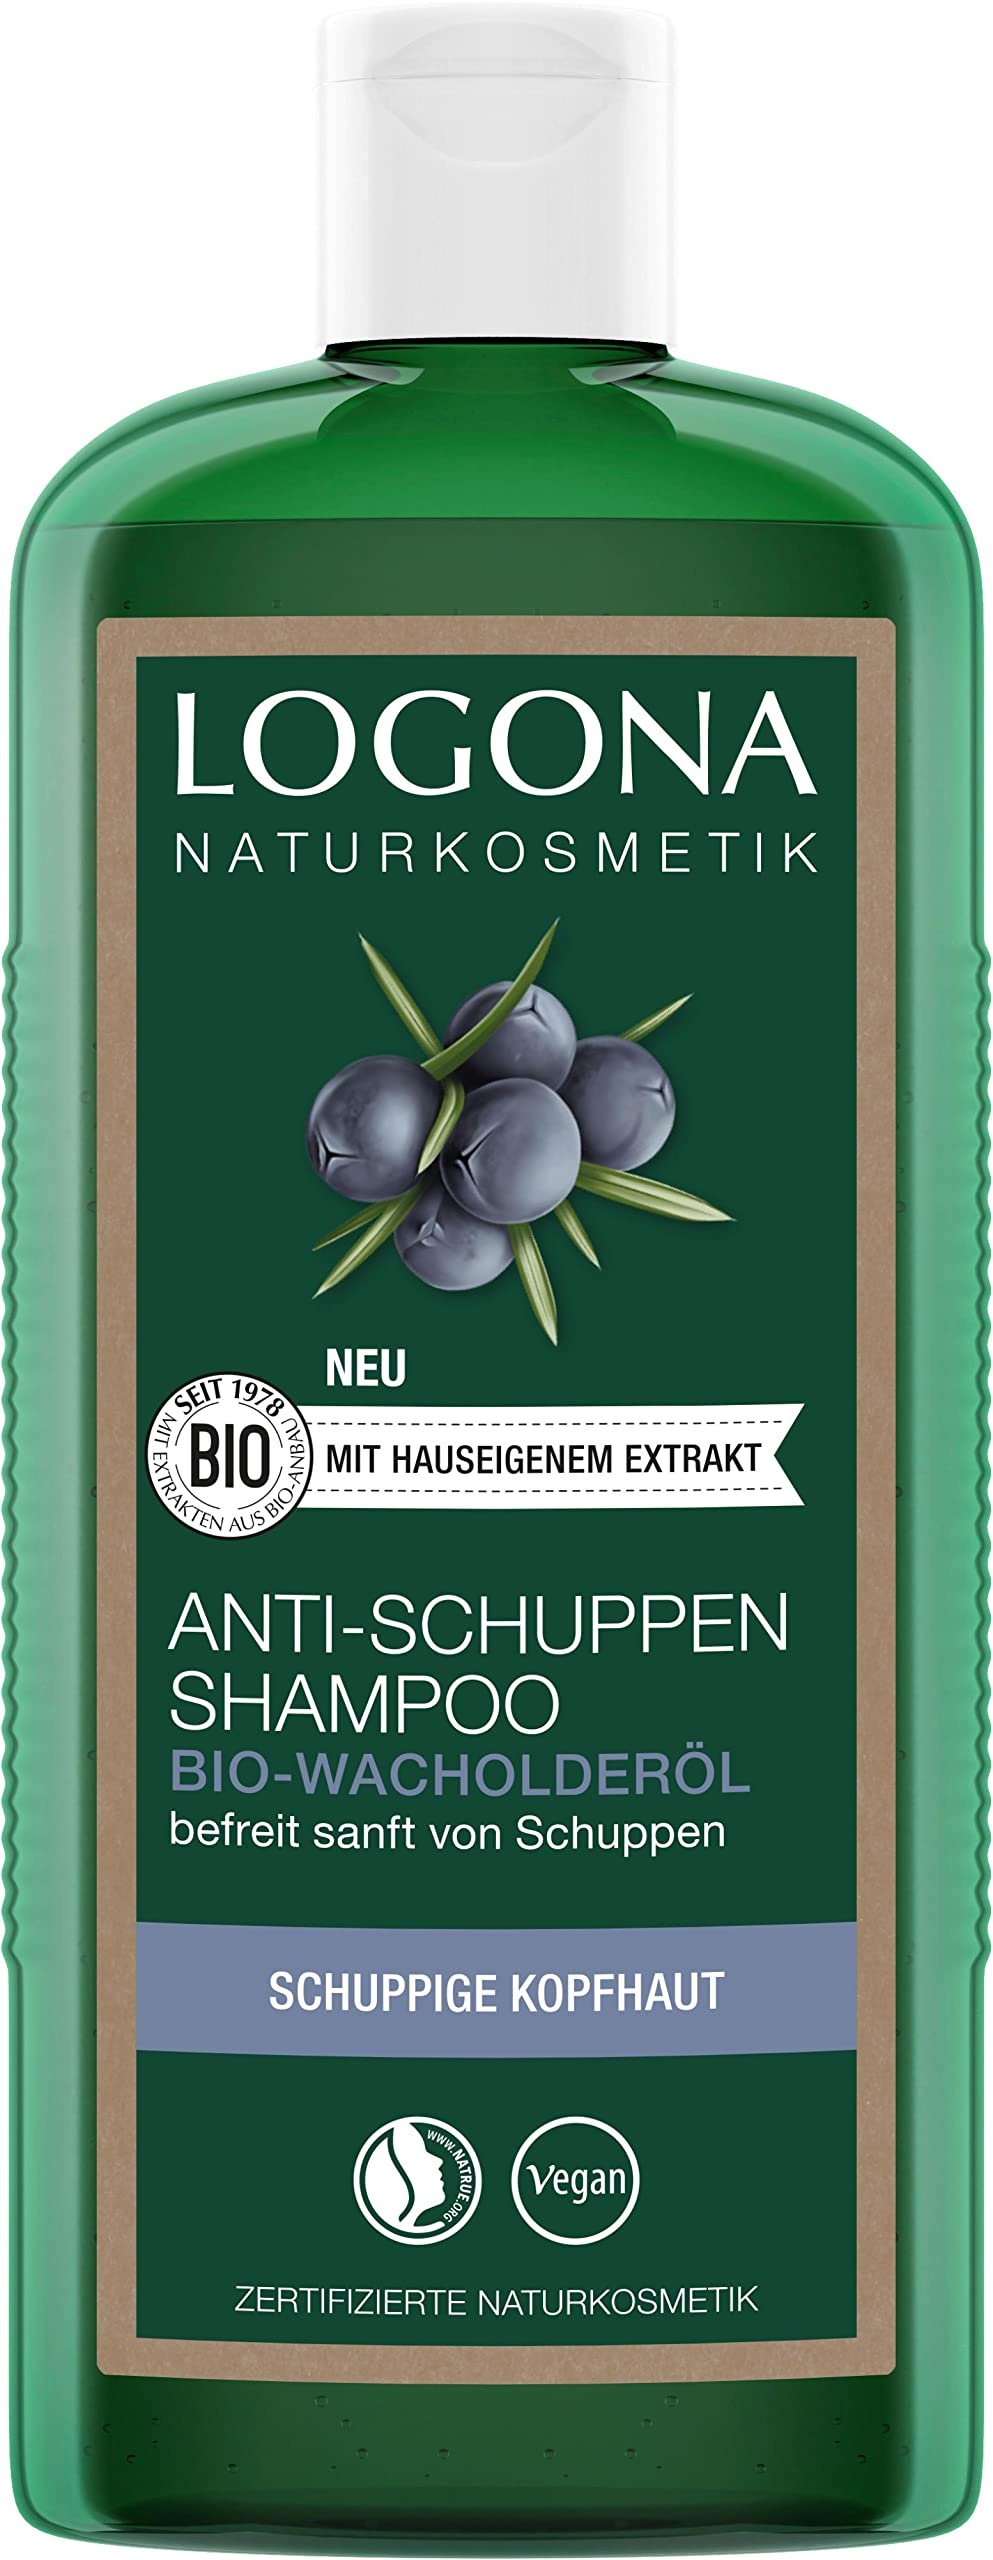 logona anti-schuppen shampoo wacholderl